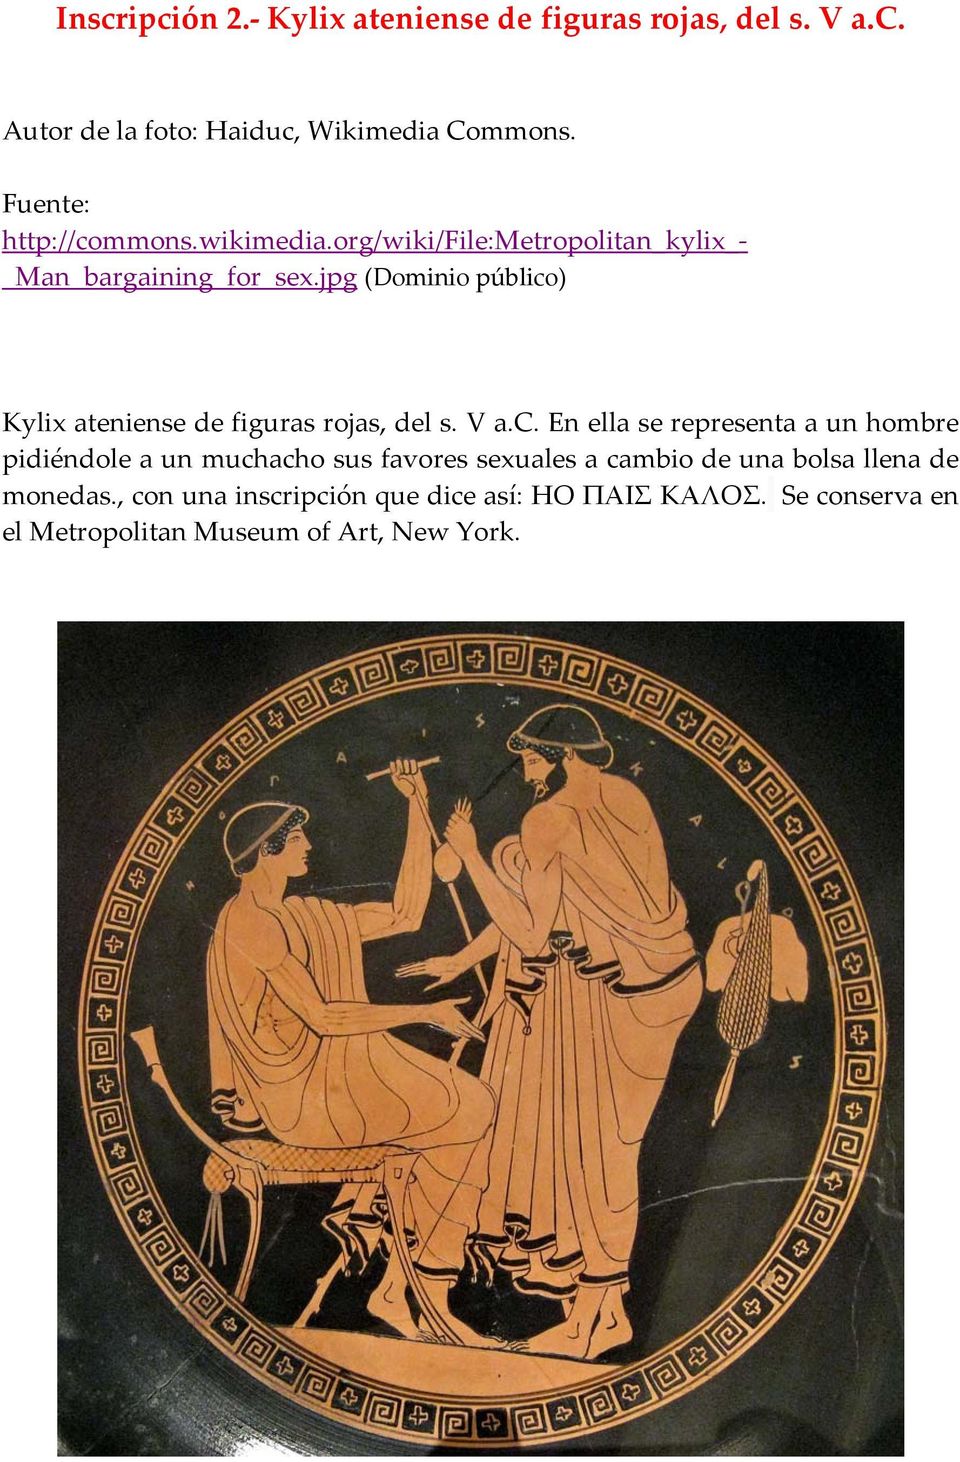 jpg Kylix ateniense de figuras rojas, del s. V a.c.